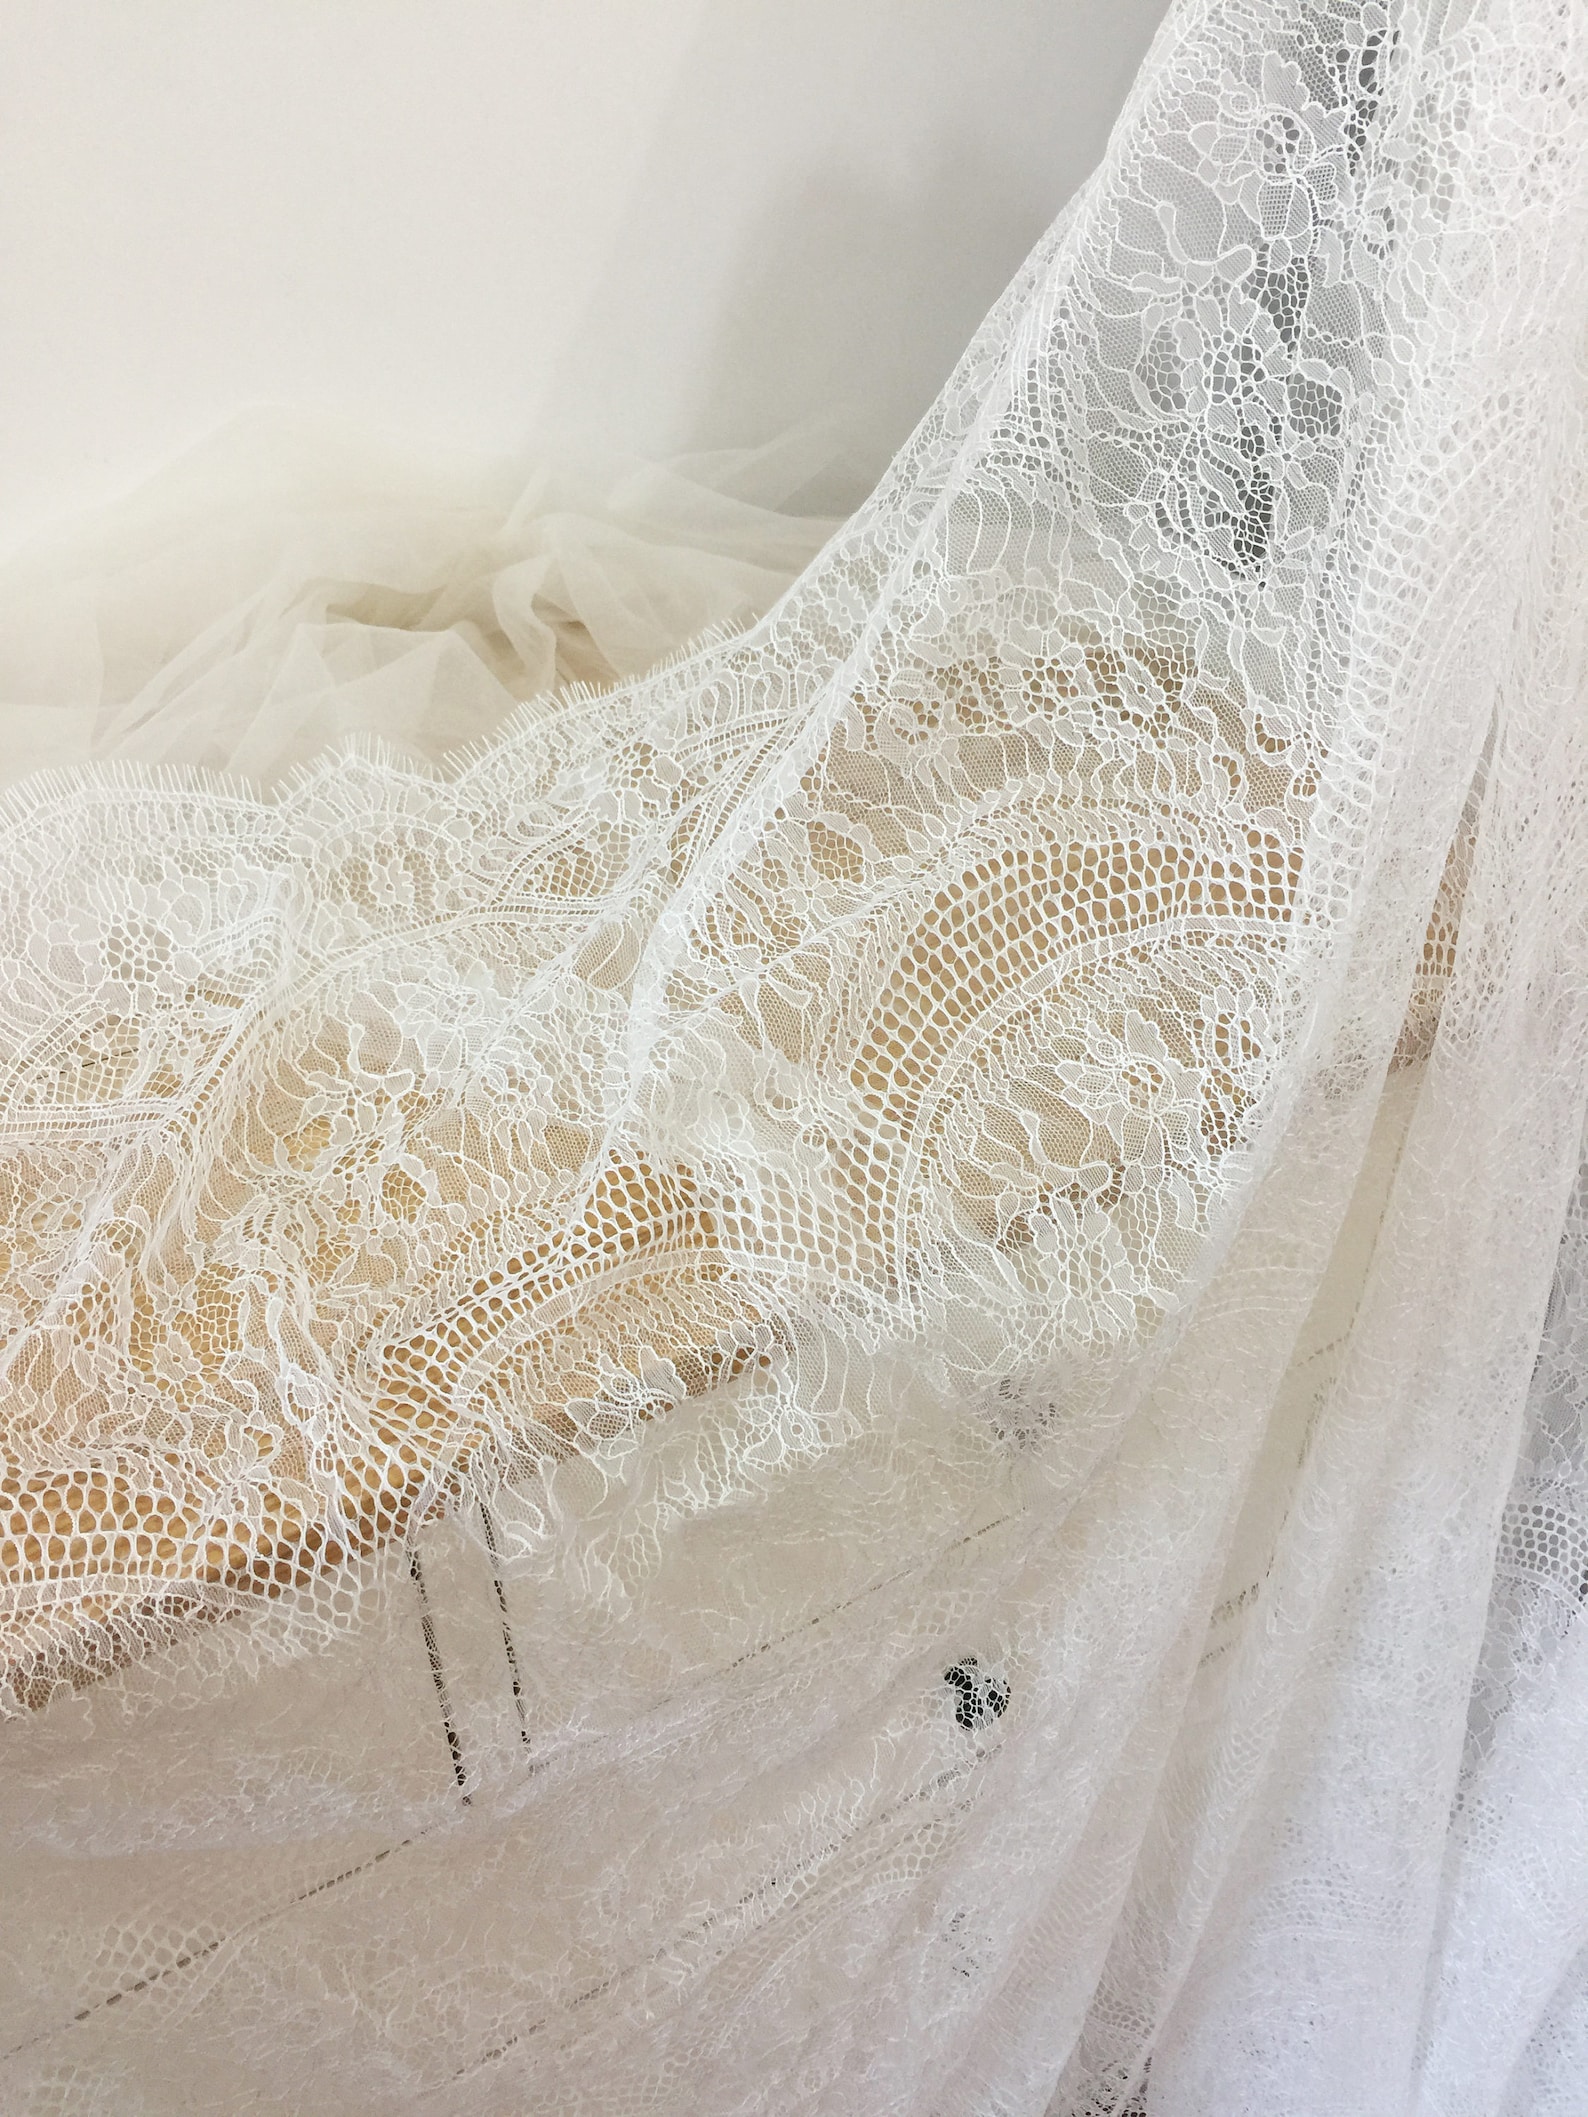 3 METER Bridal Chantilly Lace Fabric Lingerie Lace Eyelash | Etsy